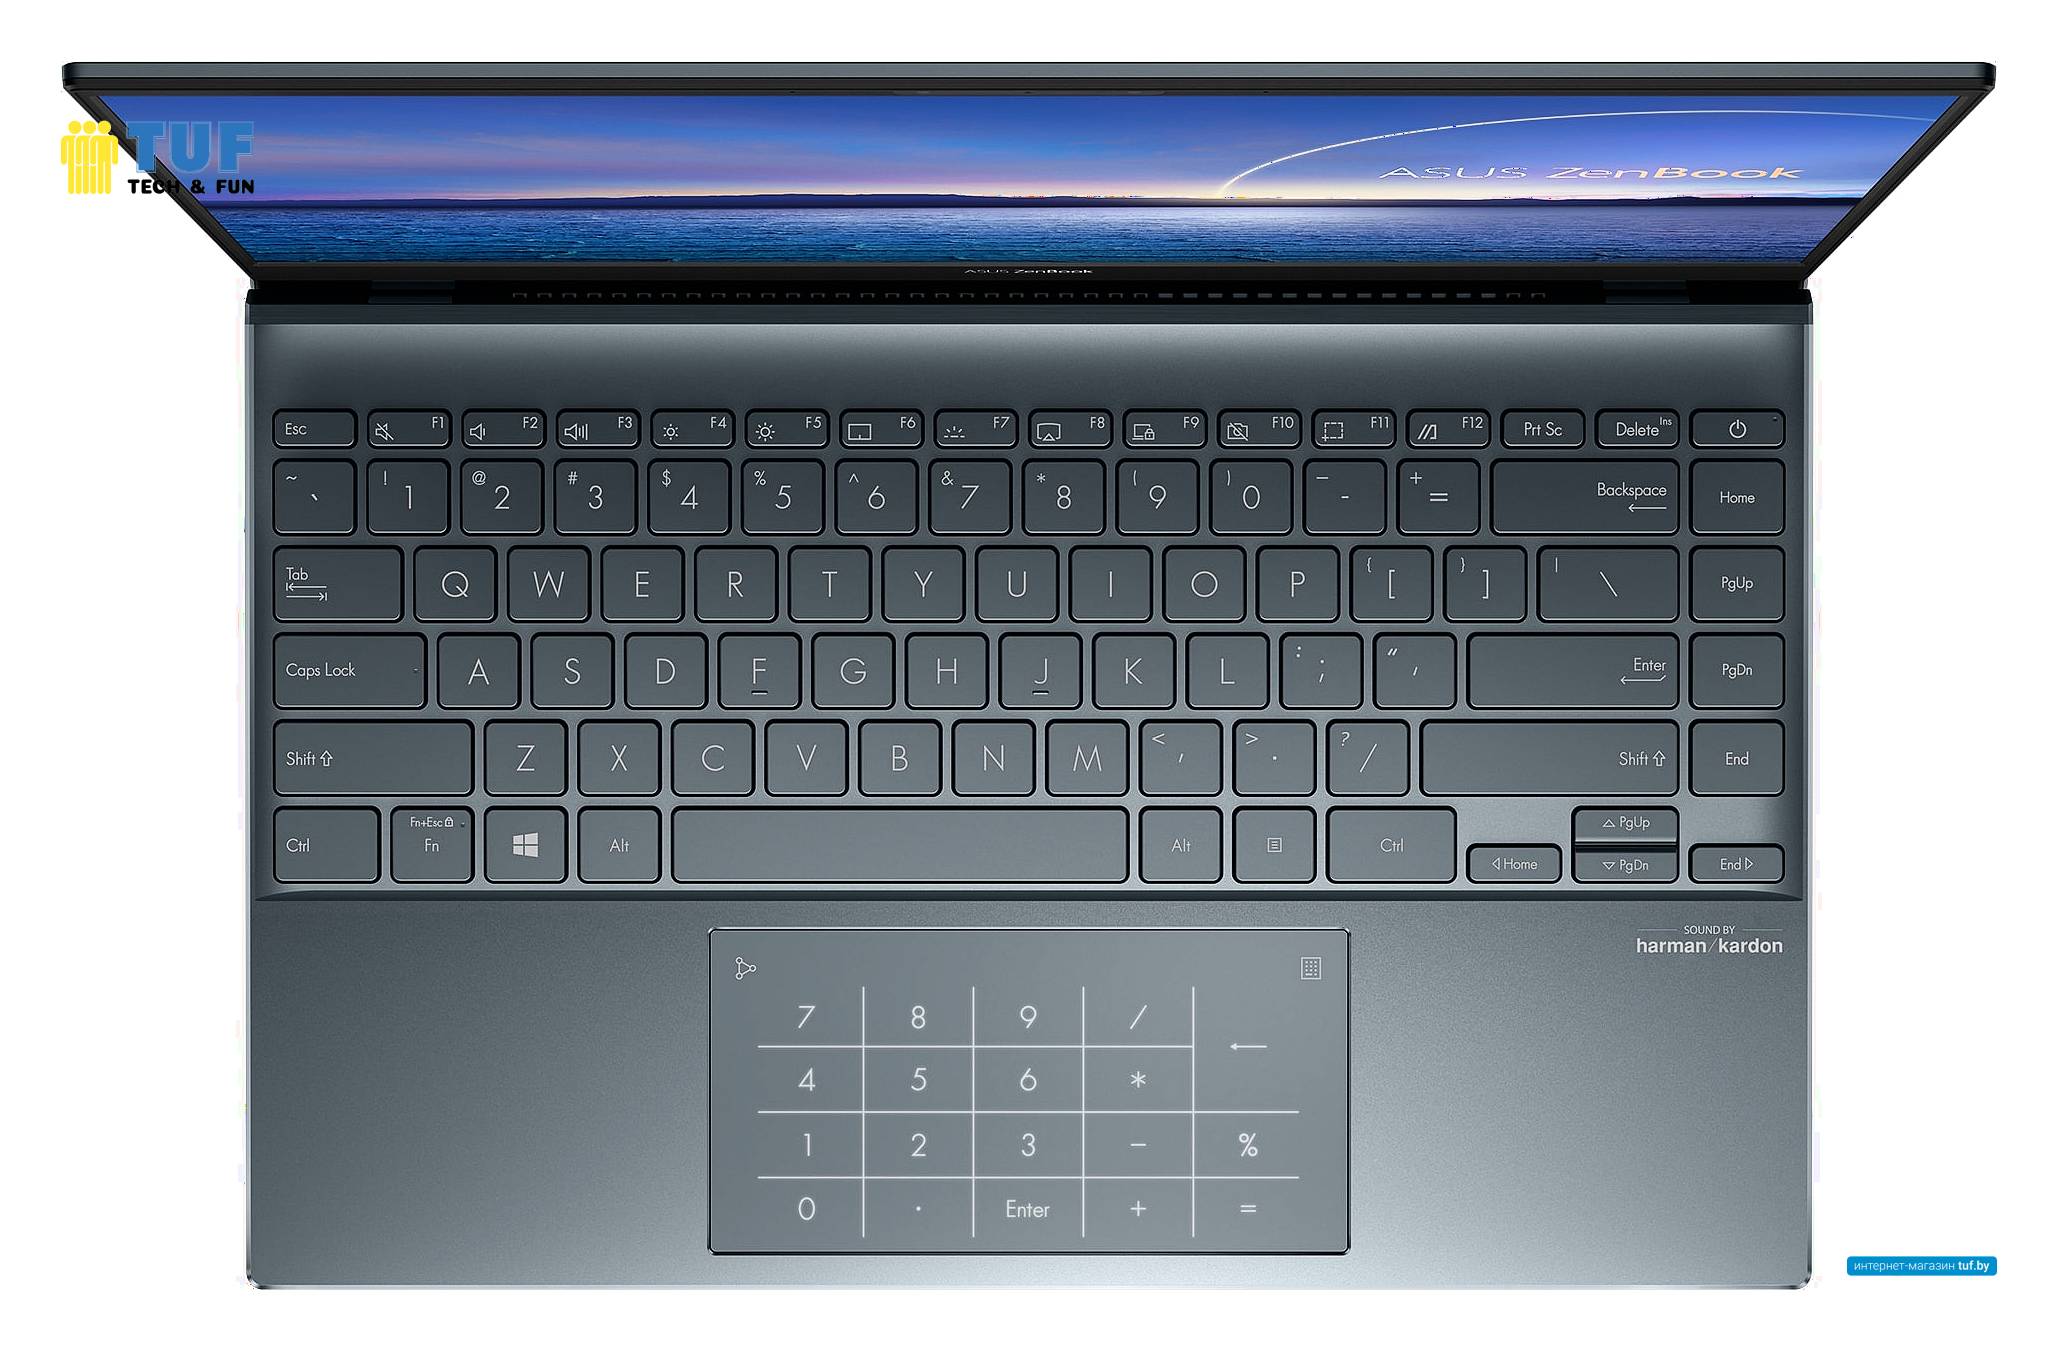 Ноутбук ASUS ZenBook 14 UX425JA-BM031T